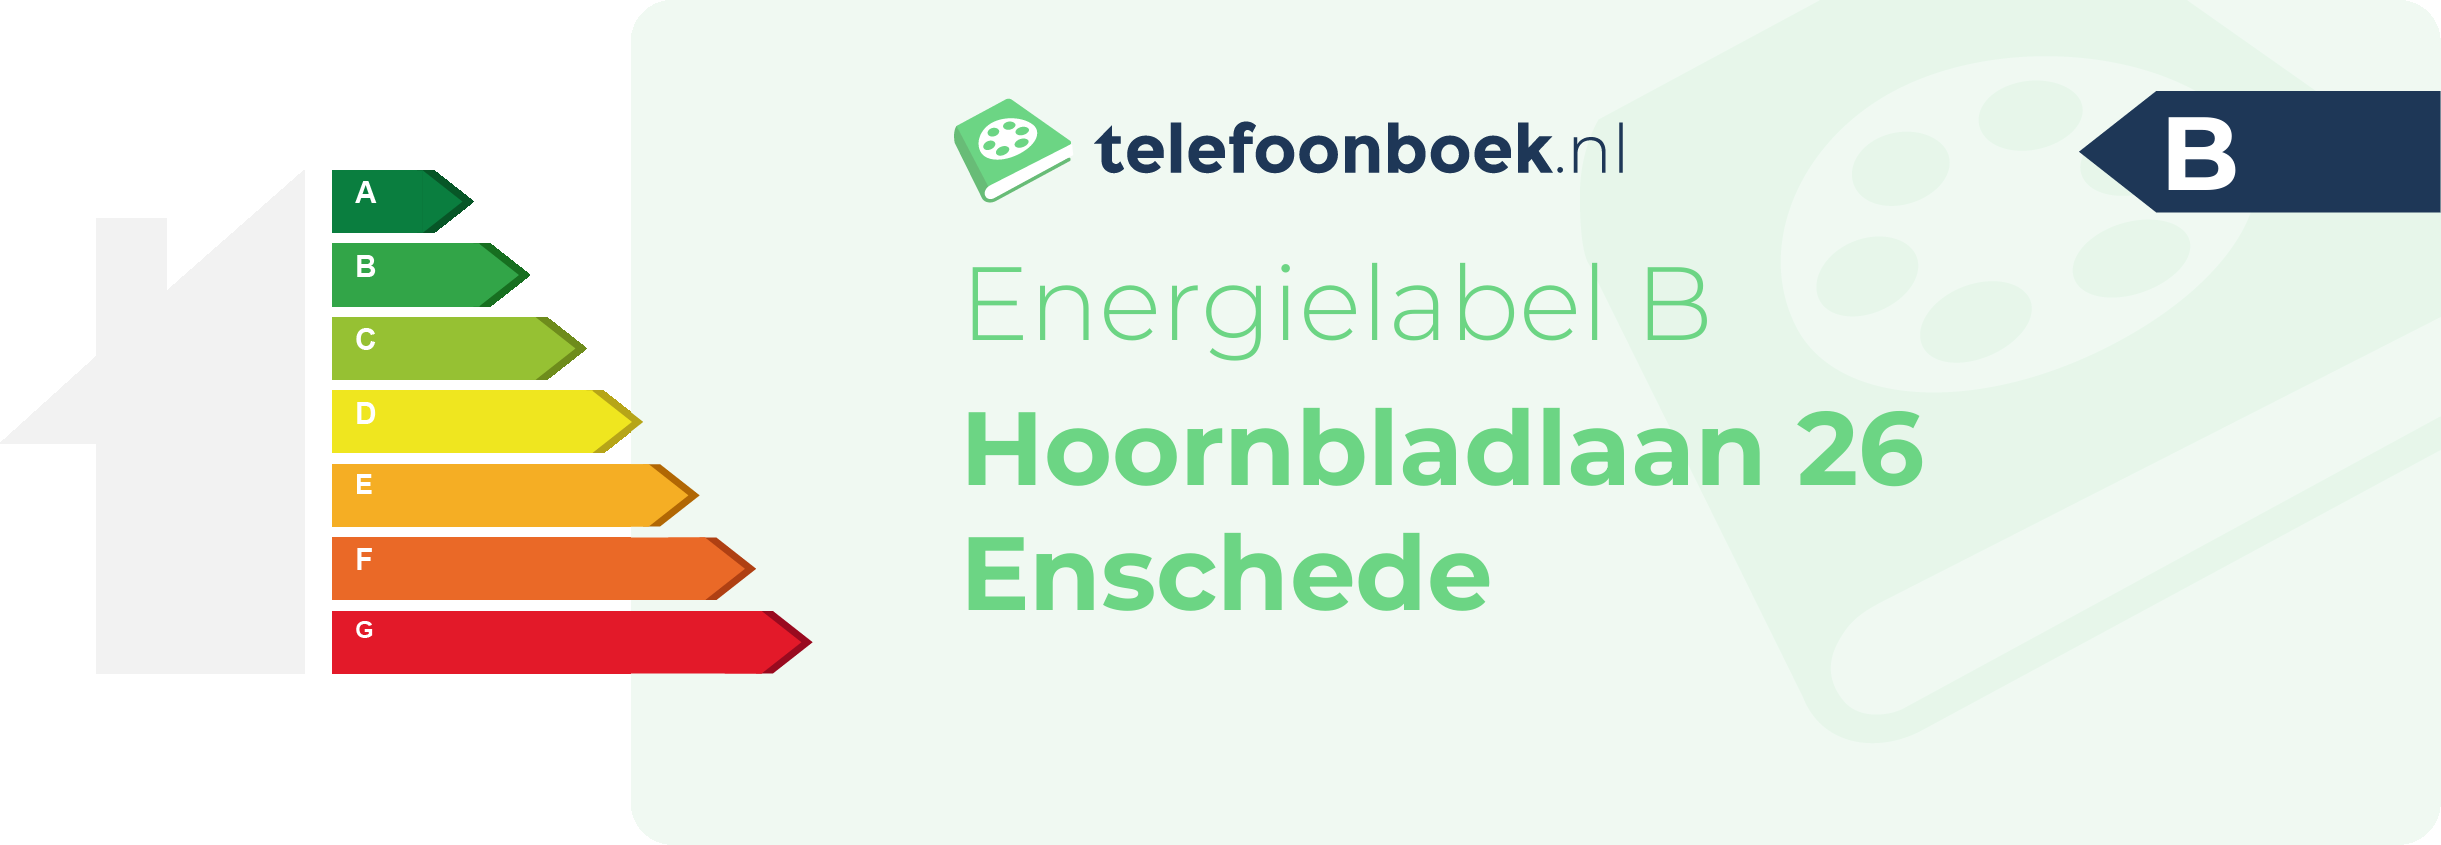 Energielabel Hoornbladlaan 26 Enschede